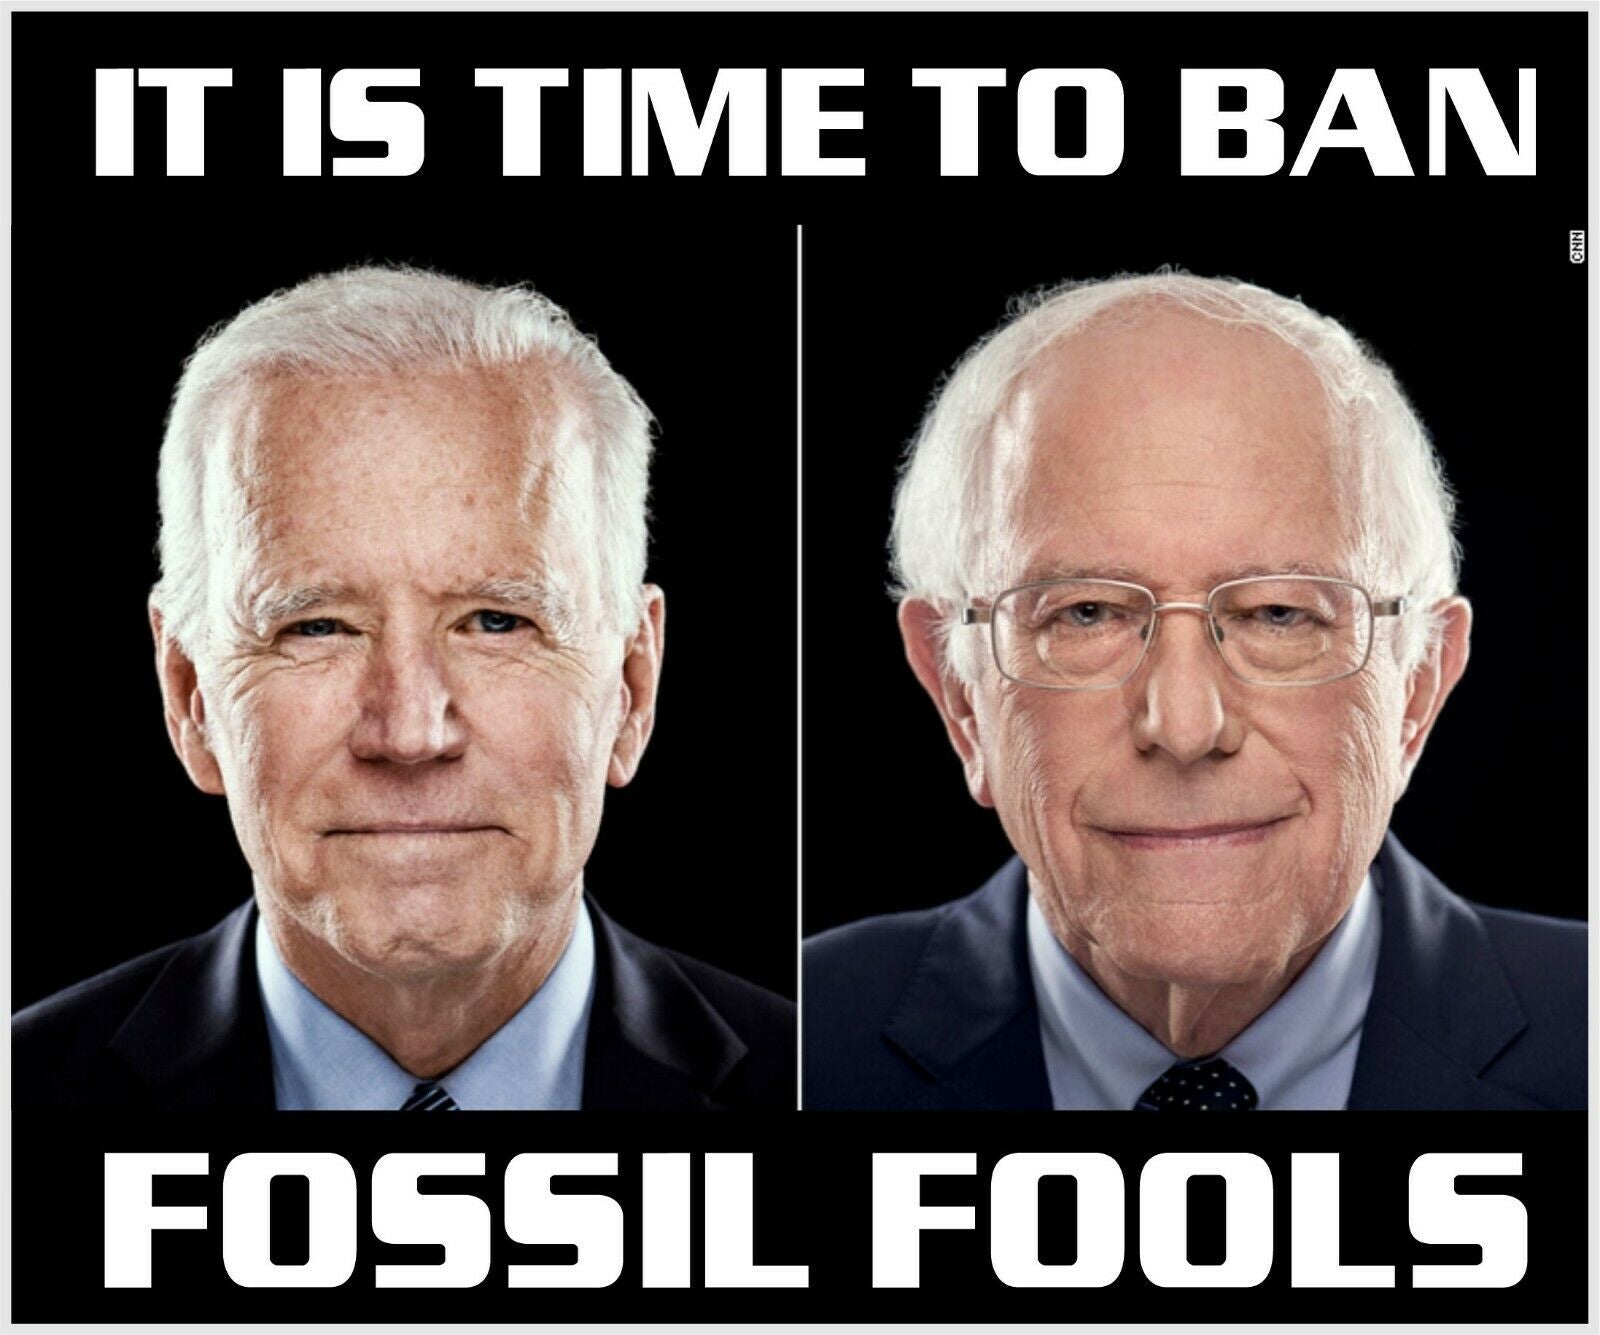 Joe Biden Bernie Sanders Bumper Sticker XL SIZE Time to ban Fossil Fools 10"x12" - Powercall Sirens LLC